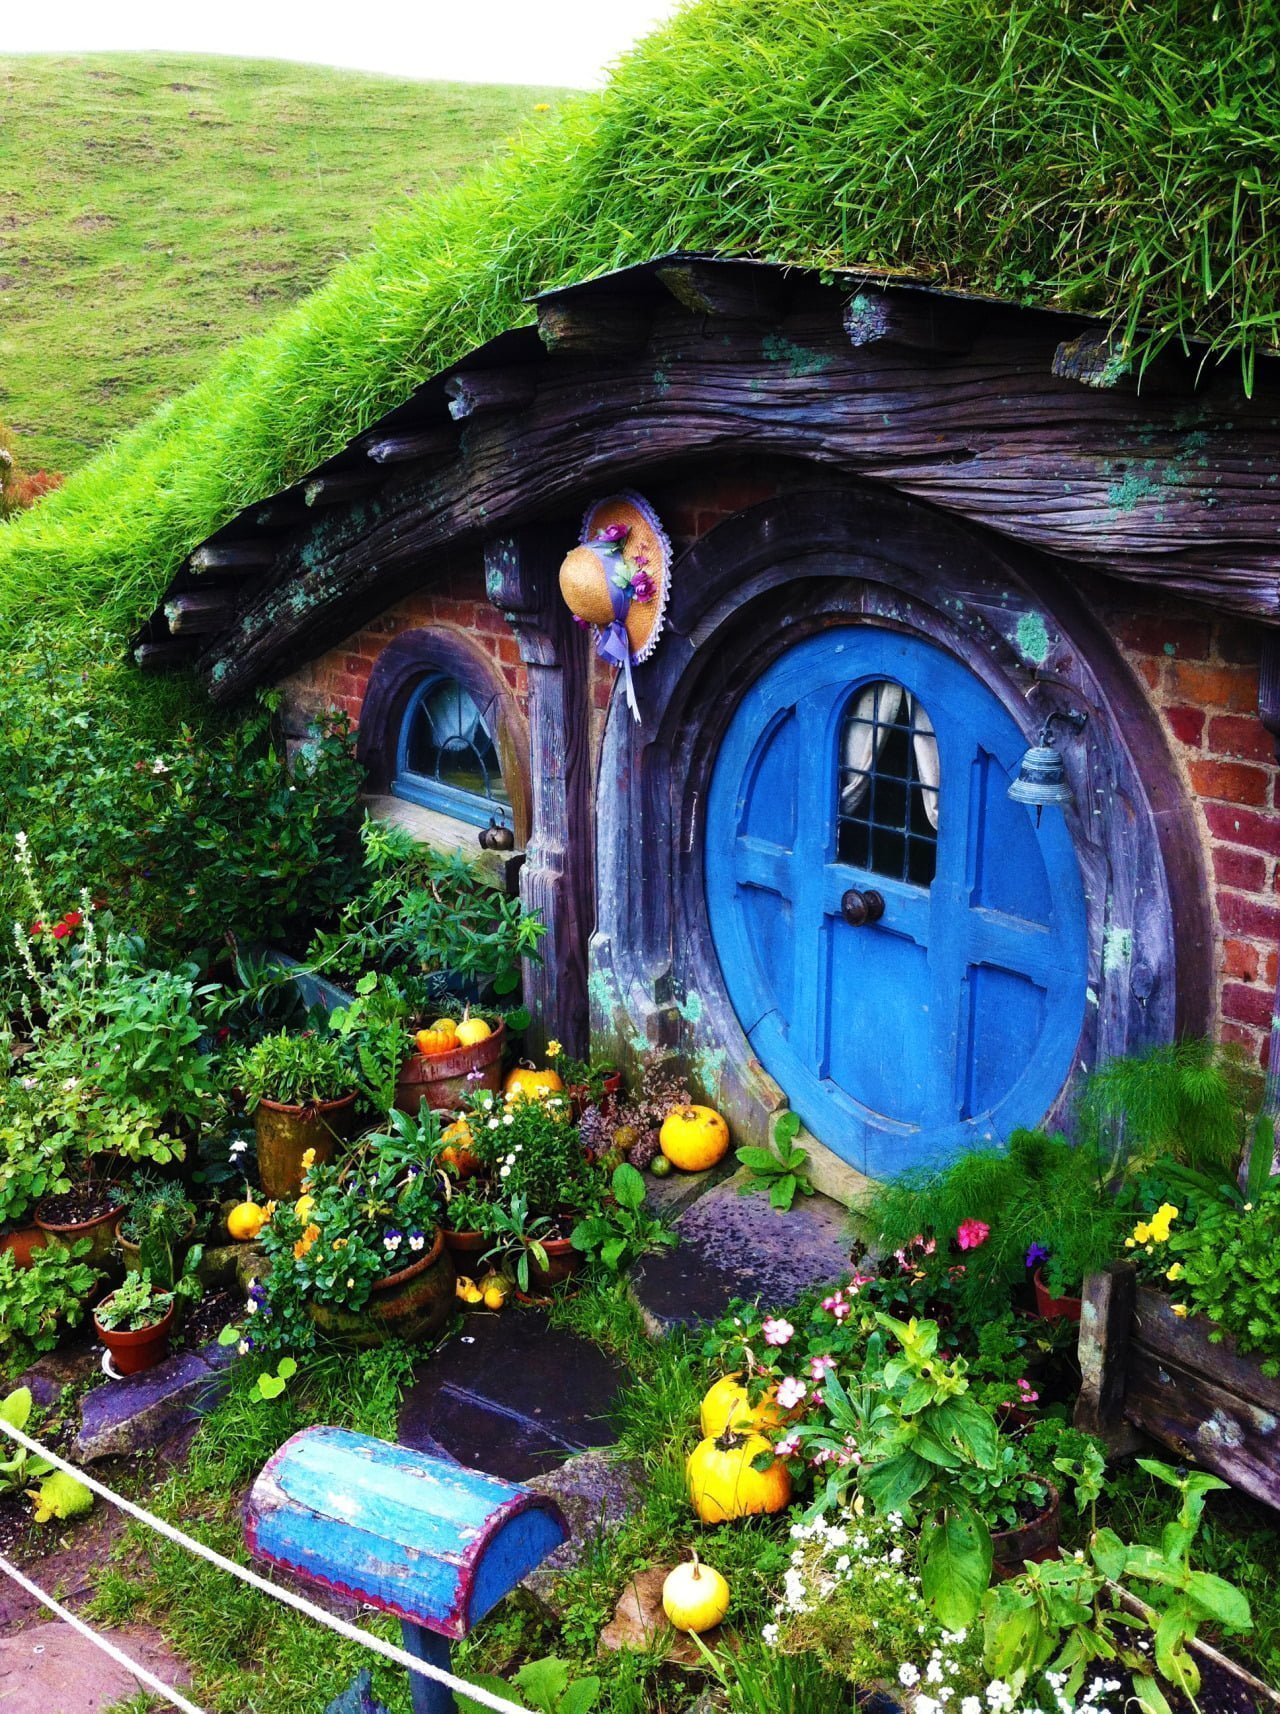 The 50 Best DIY Miniature Fairy Garden Ideas in 2016